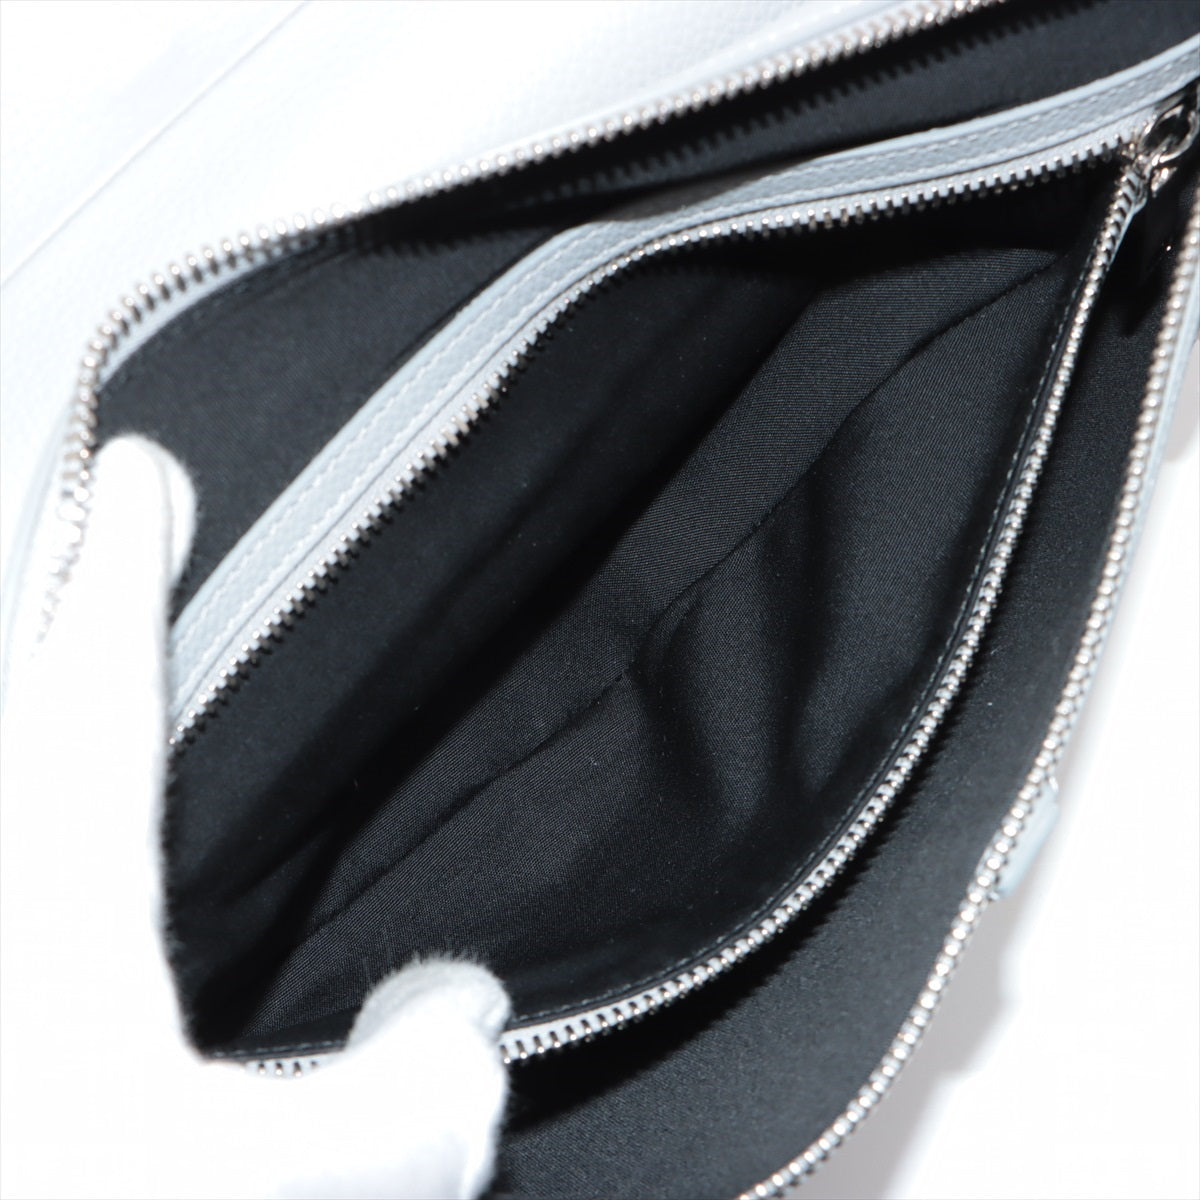 Dior Saddle Bag Leather Body Bag Gr Saddle